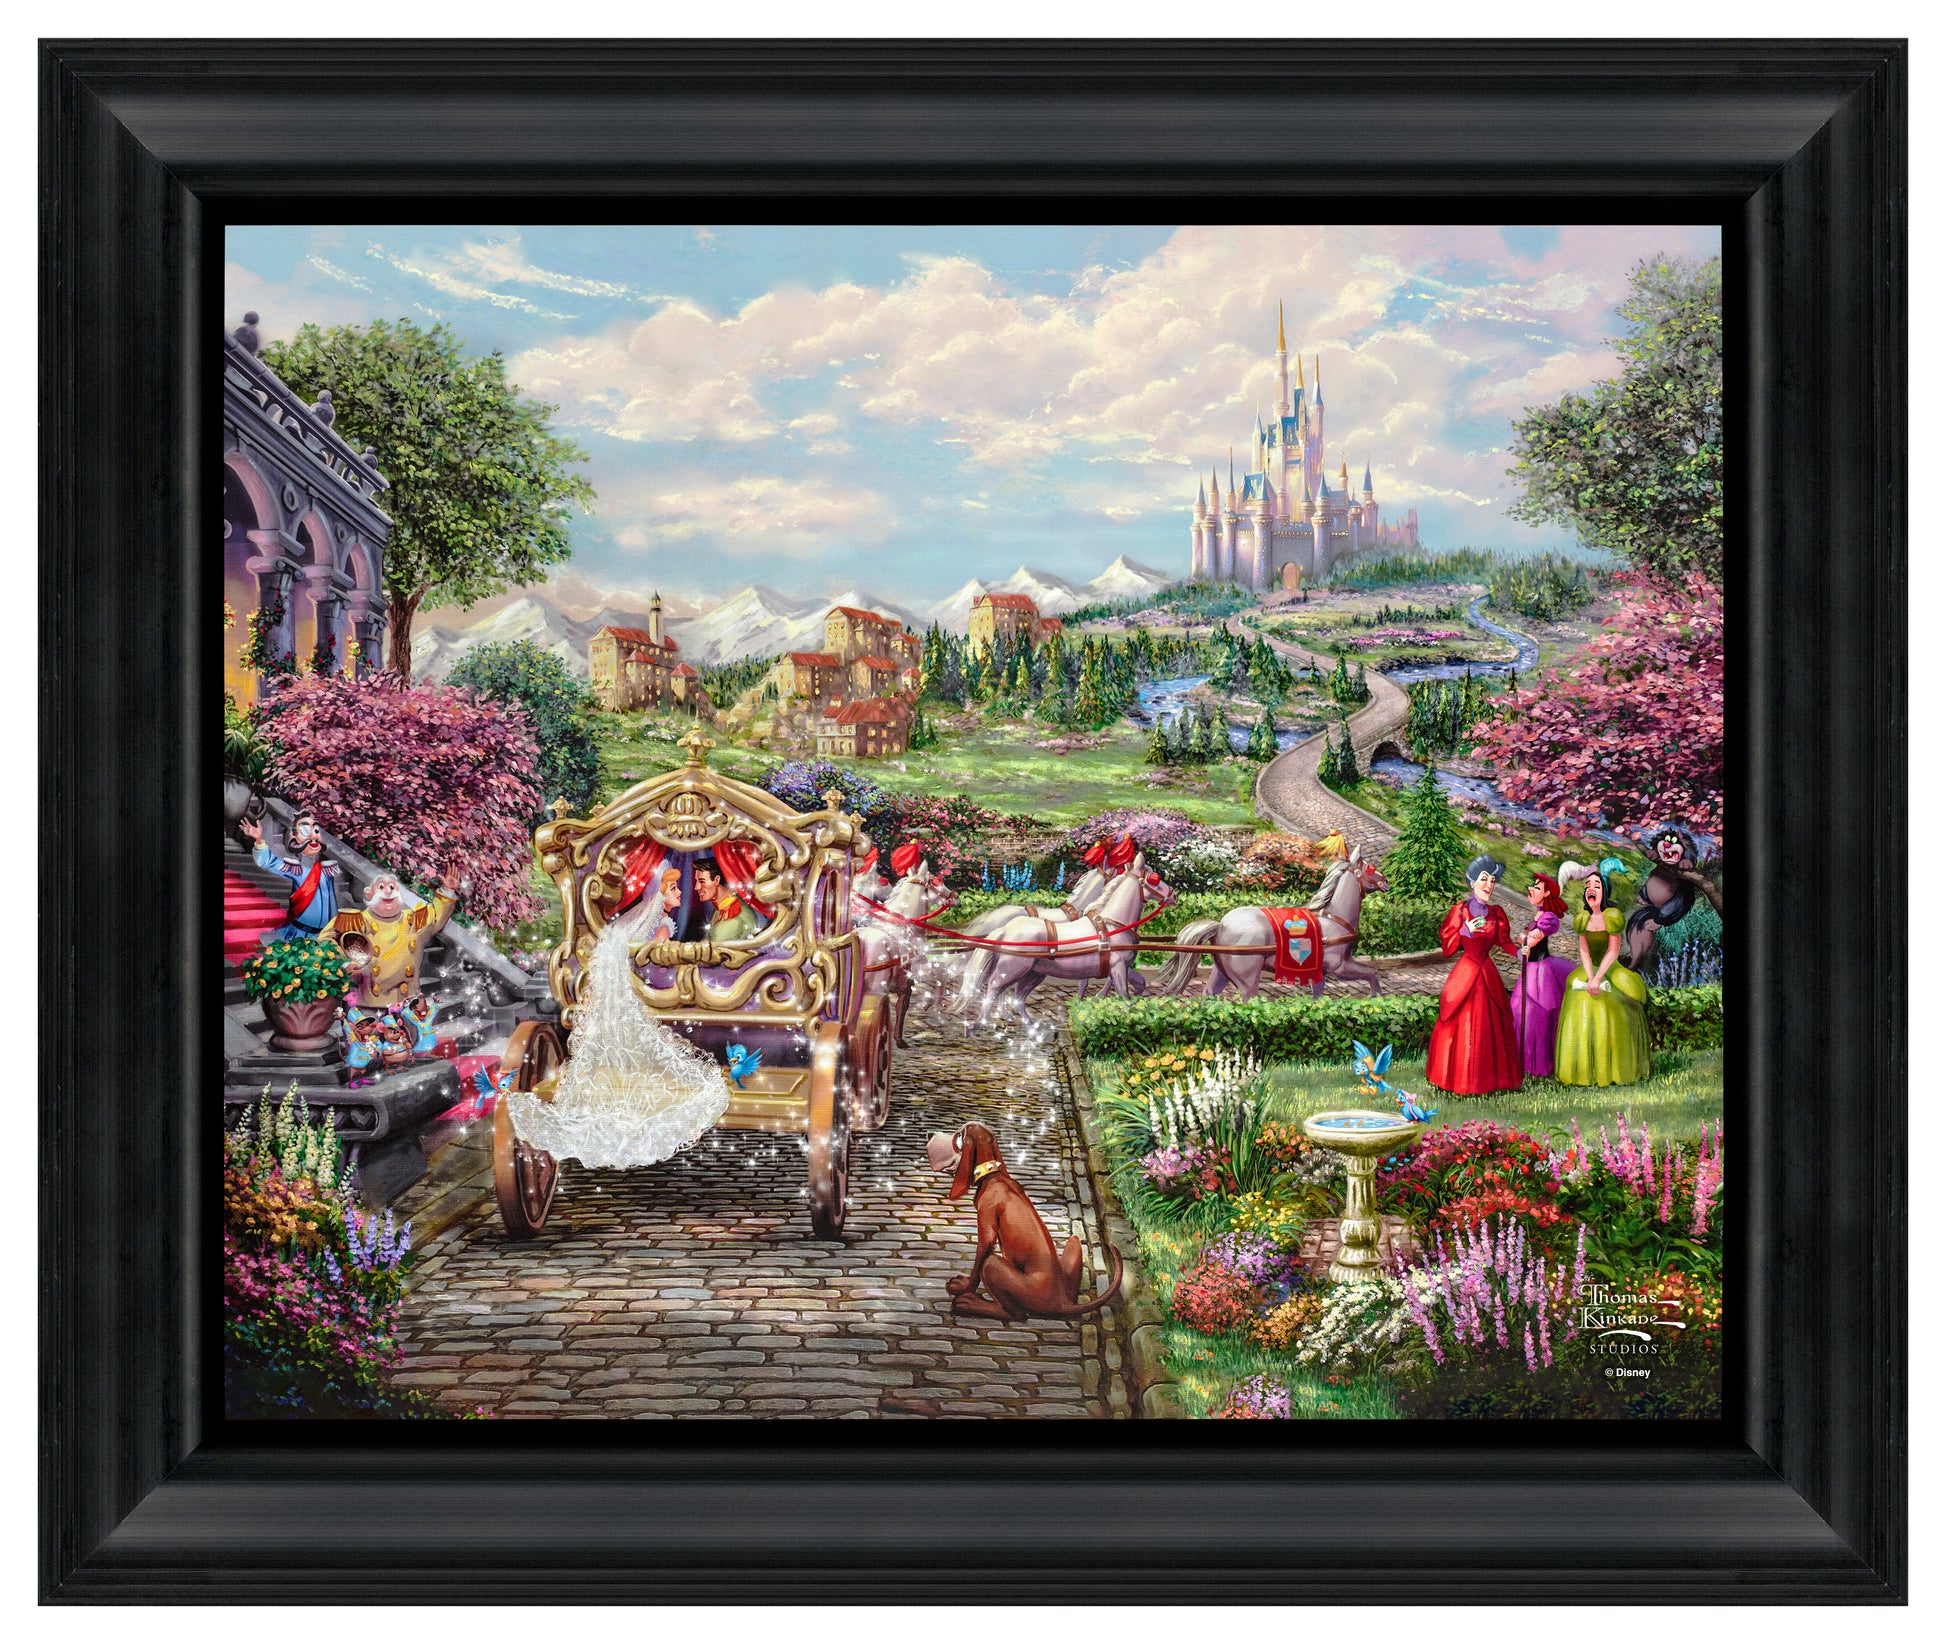 159947_f_BSV_Disney Cinderella Happily Ever After_16x20_Frame.jpg